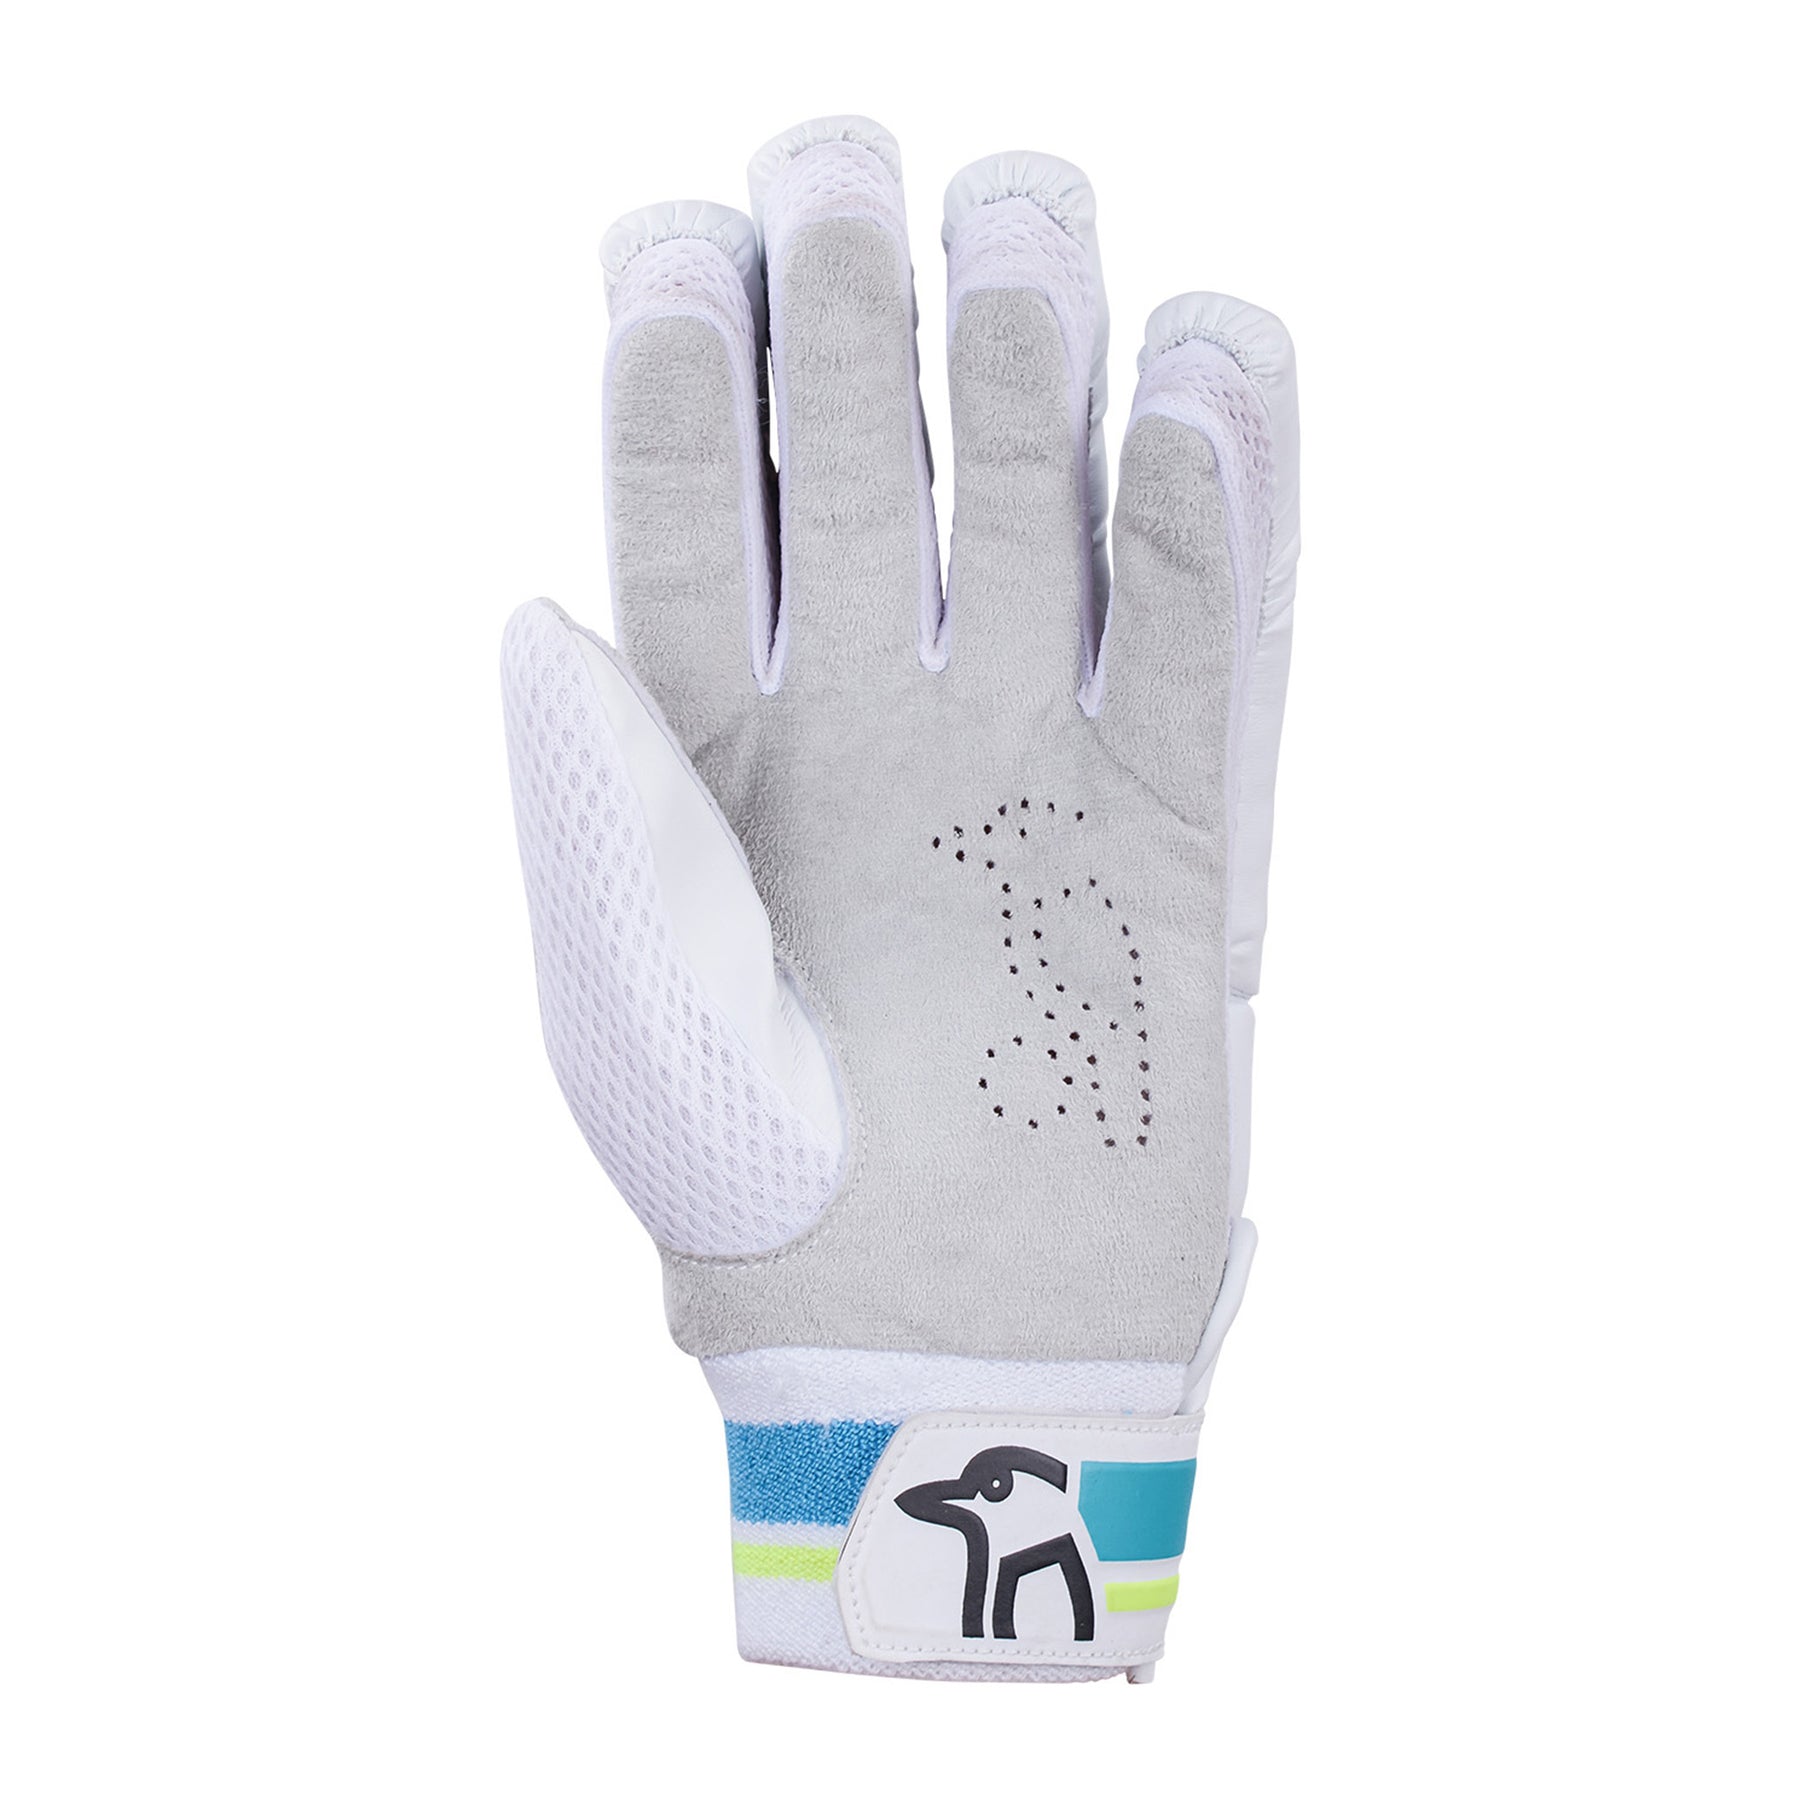 Kookaburra Rapid 5.1 Cricket Batting Gloves